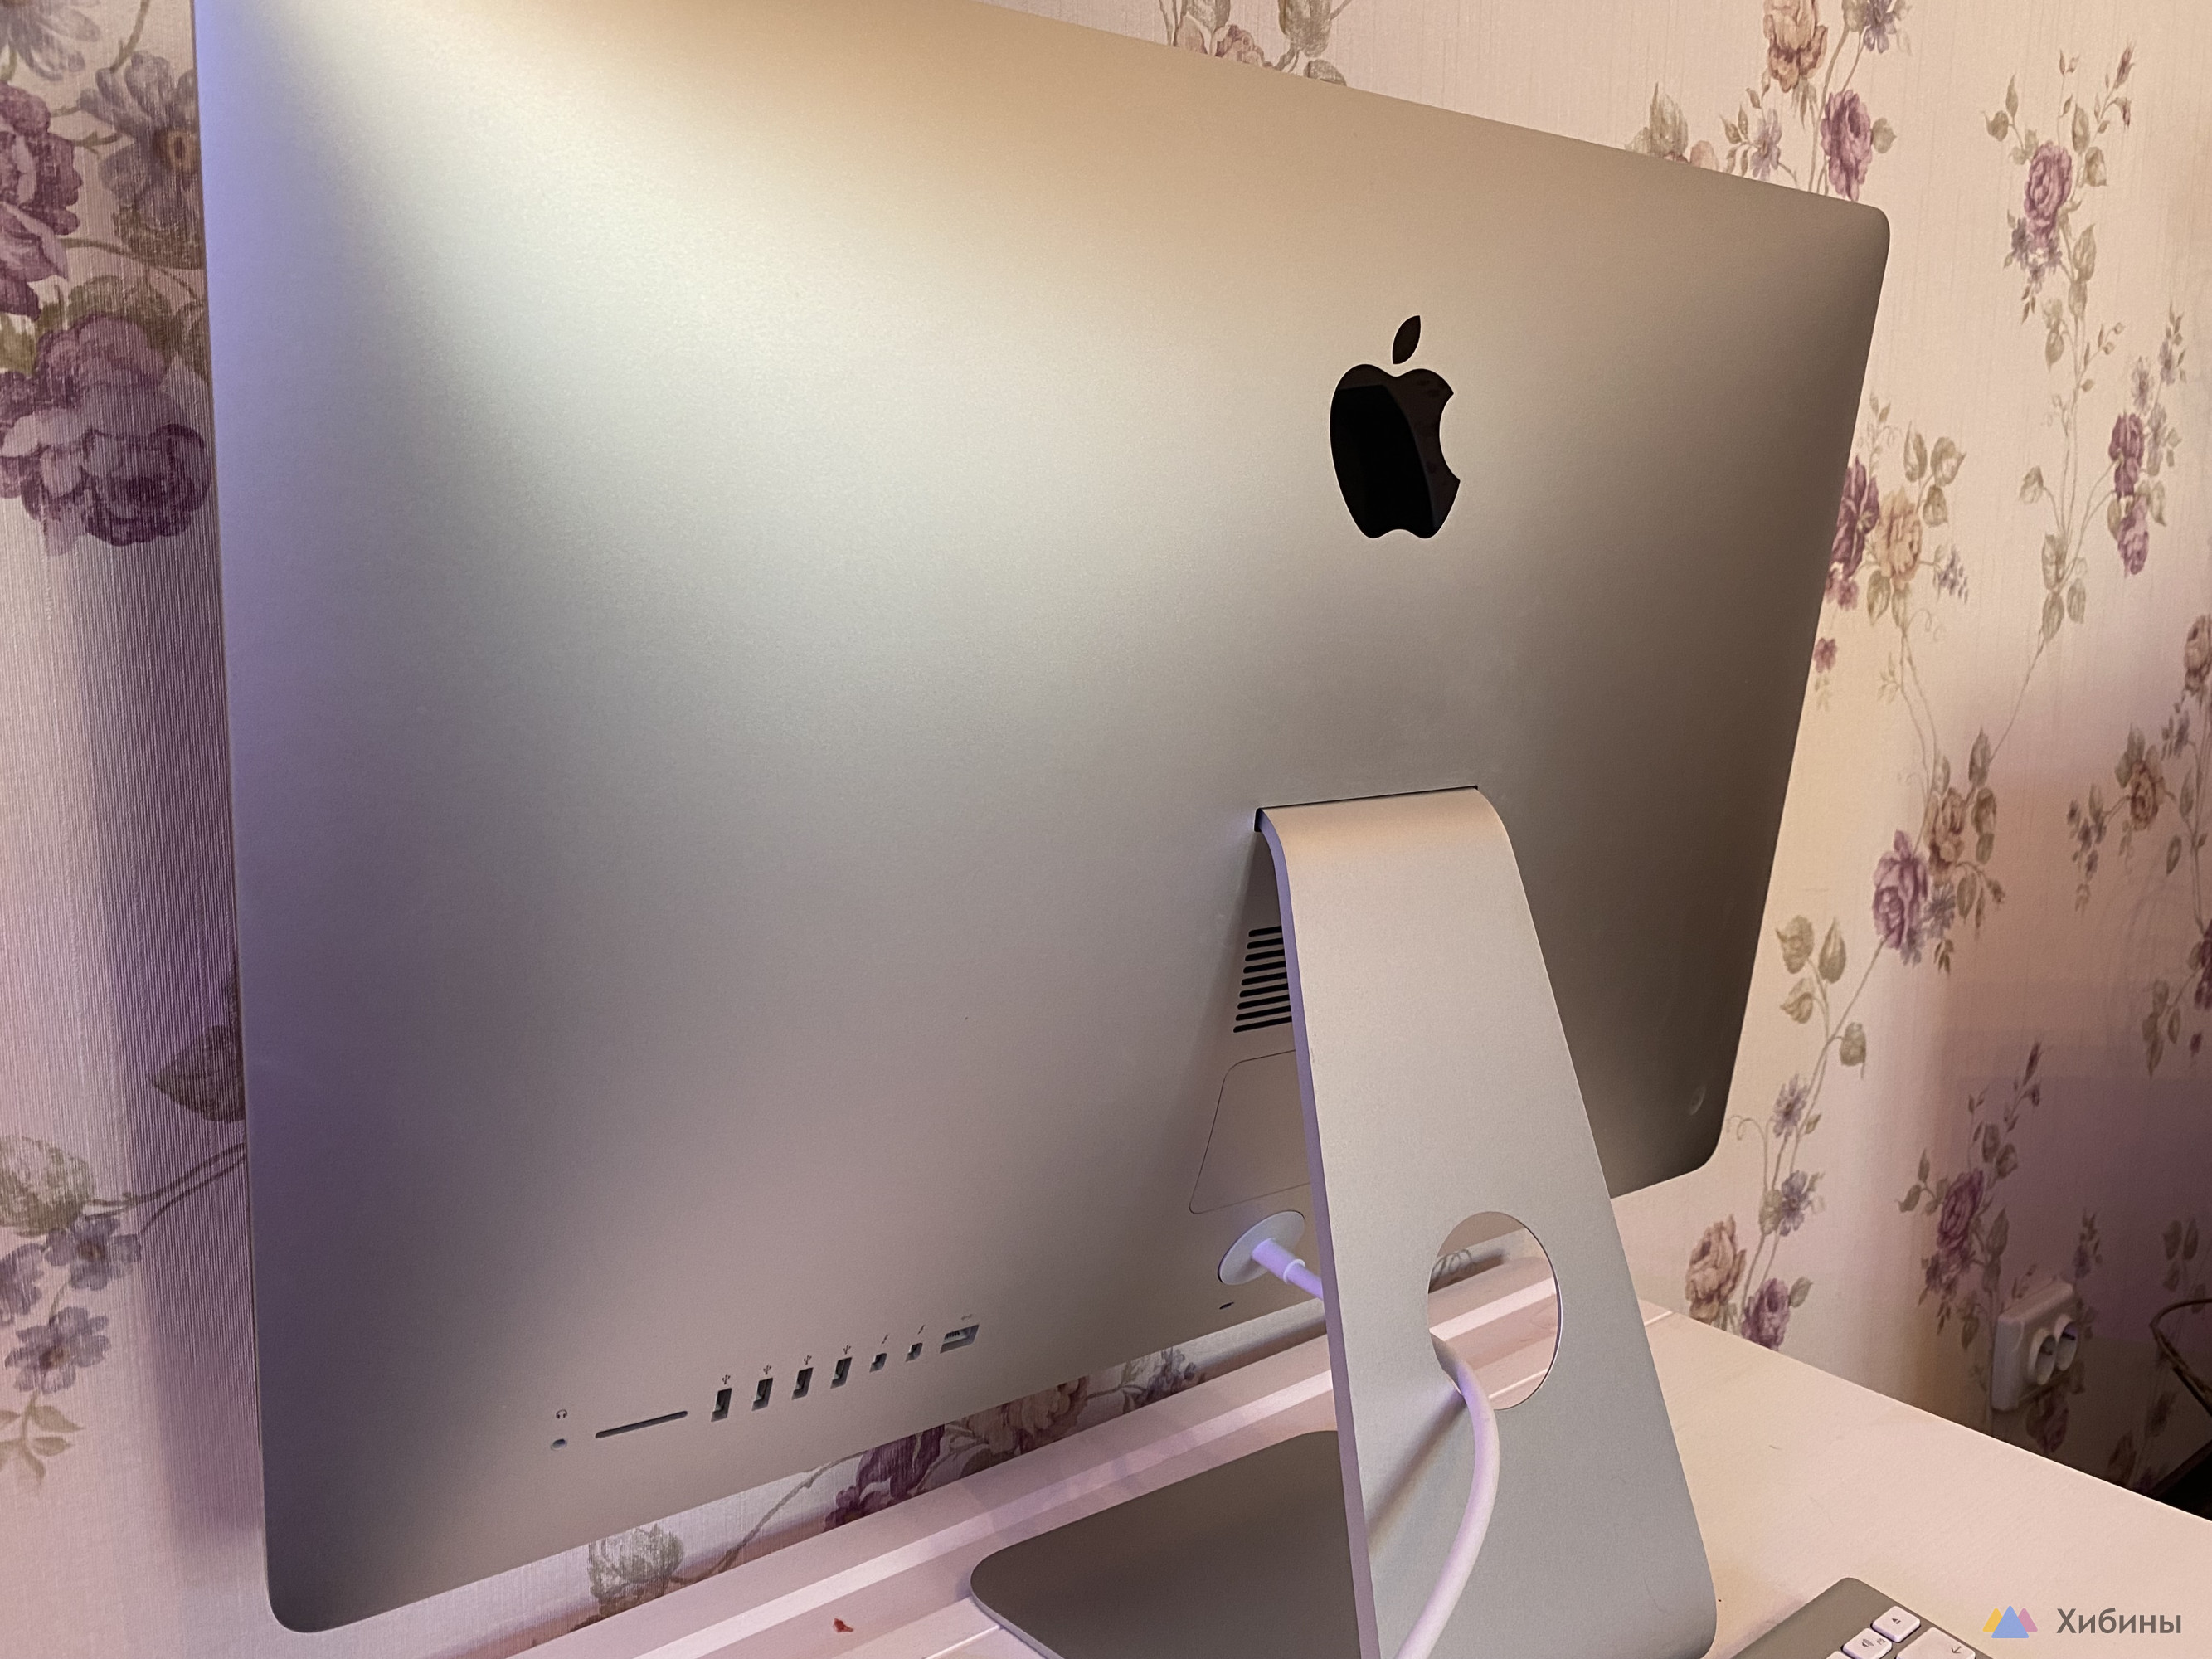 iMac Retina 5K, 27-inch, Late 2014